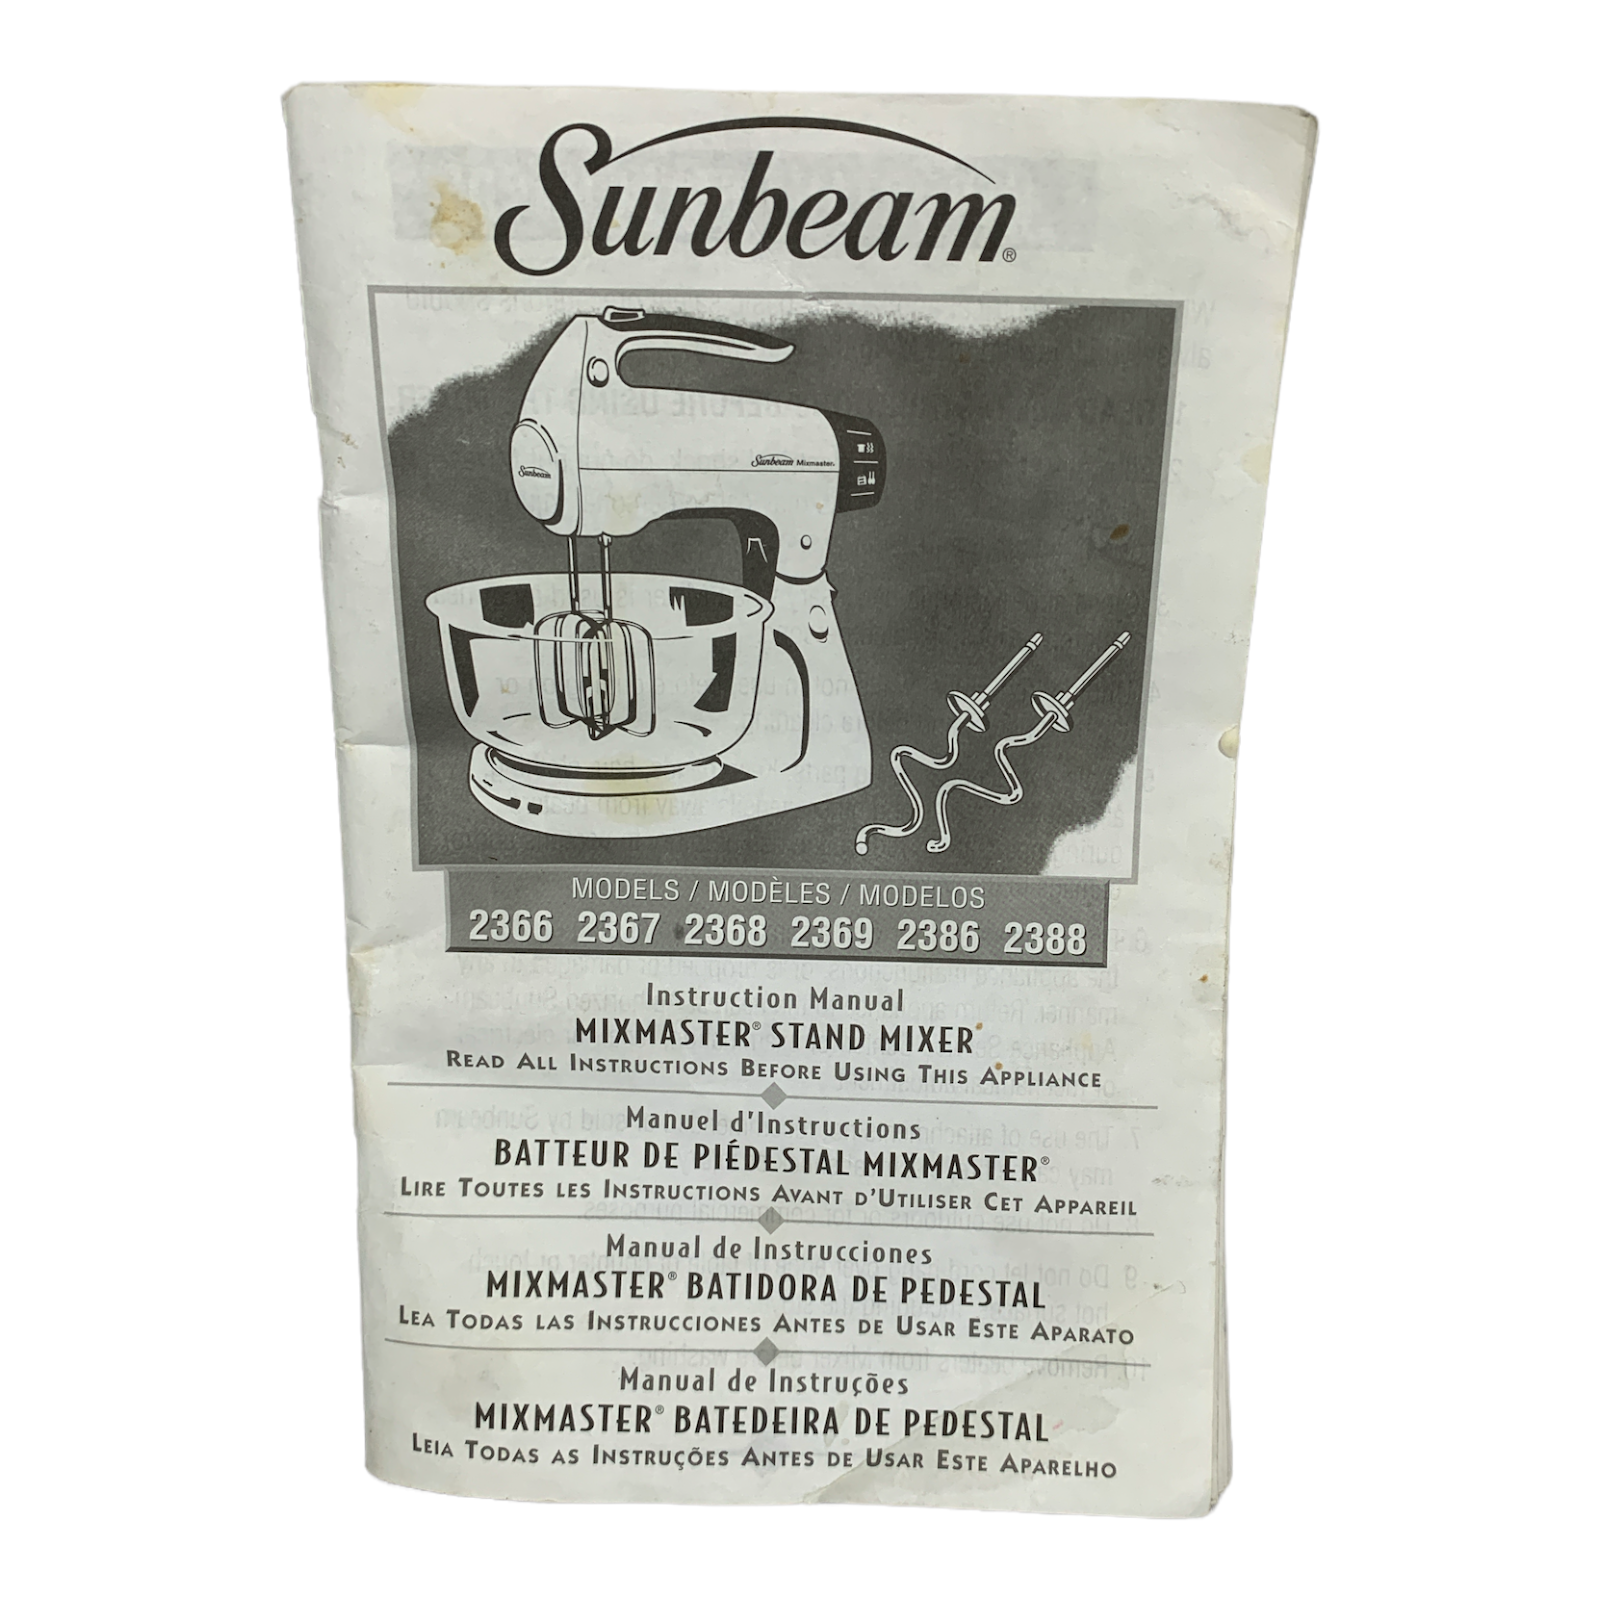 Sunbeam Mixmaster Mixer Instruction Owner Manual 2366 2367 2368 2386 2388 - $8.42